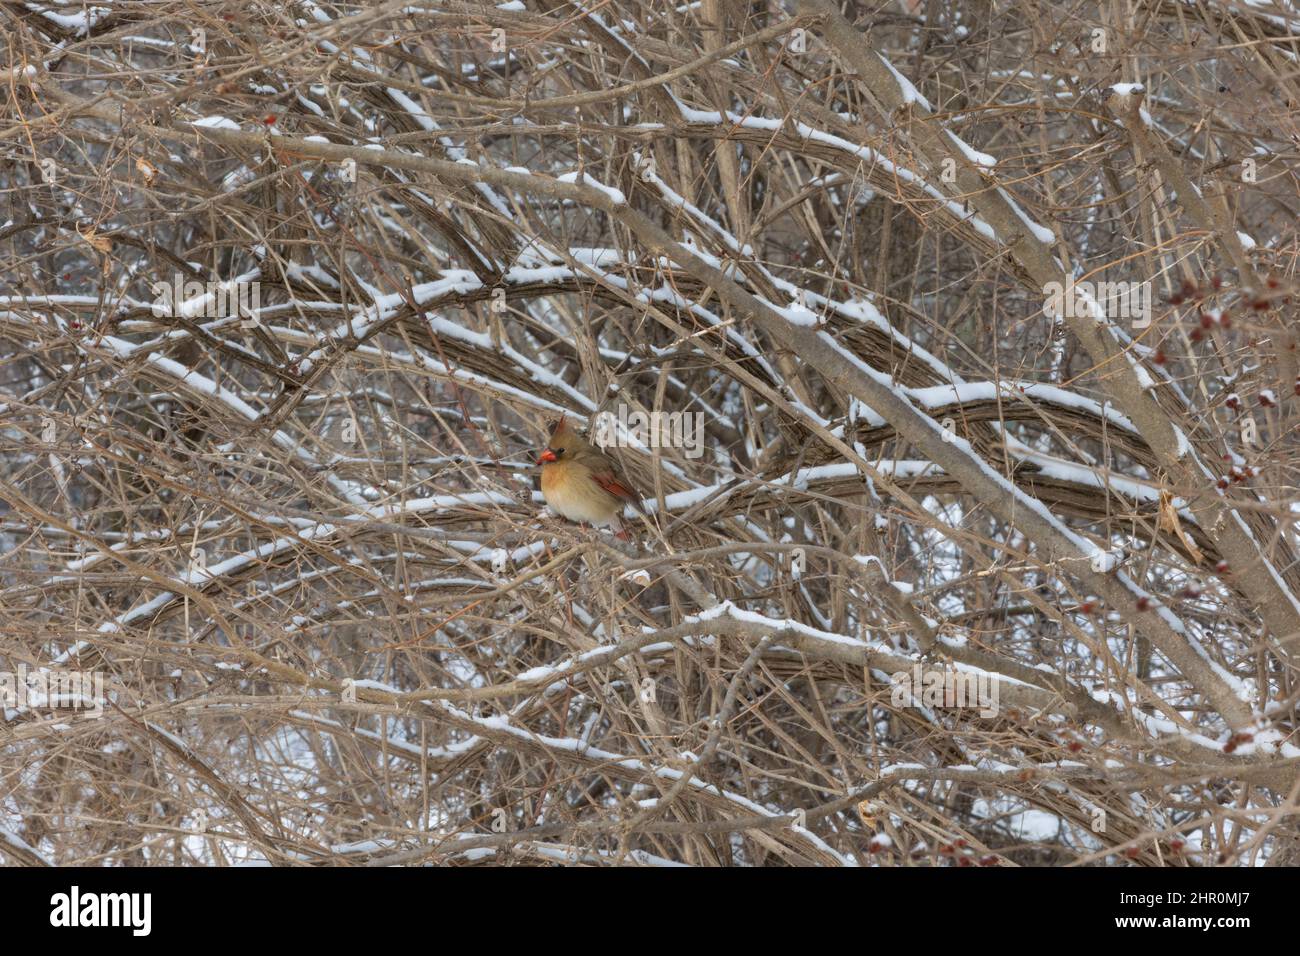 Female cardinal eating berries in winter Stock Photo